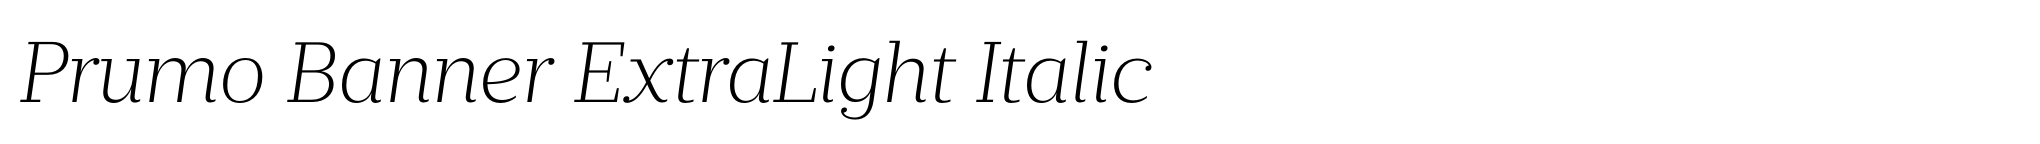 Prumo Banner ExtraLight Italic image